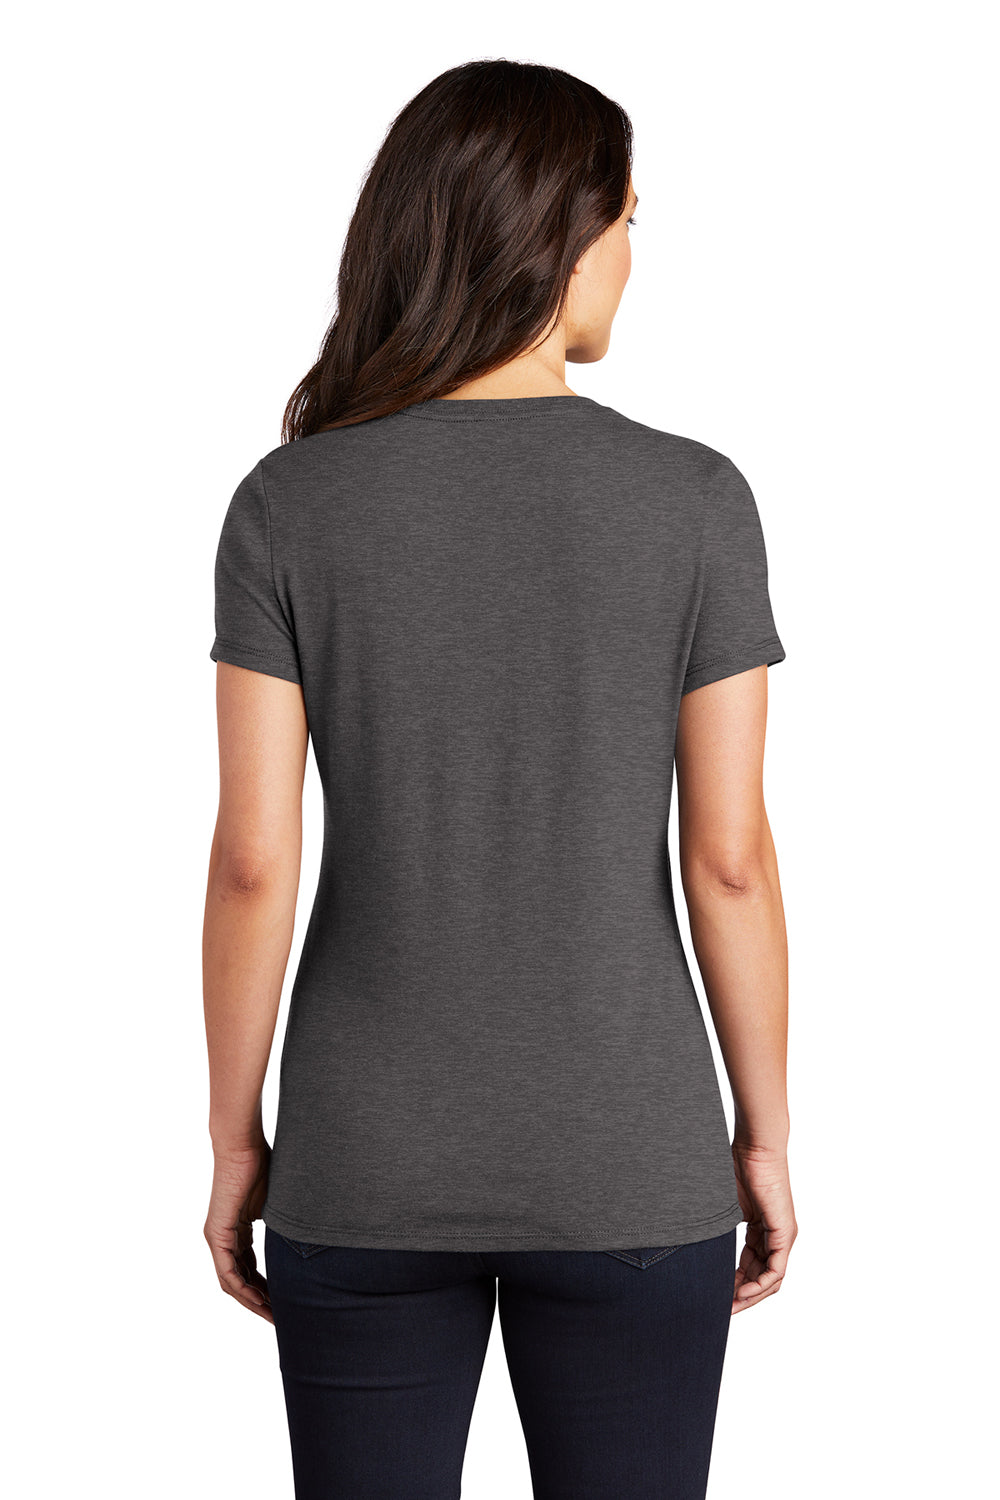 District DM130L Womens Perfect Tri Short Sleeve Crewneck T-Shirt Heather Charcoal Grey Back